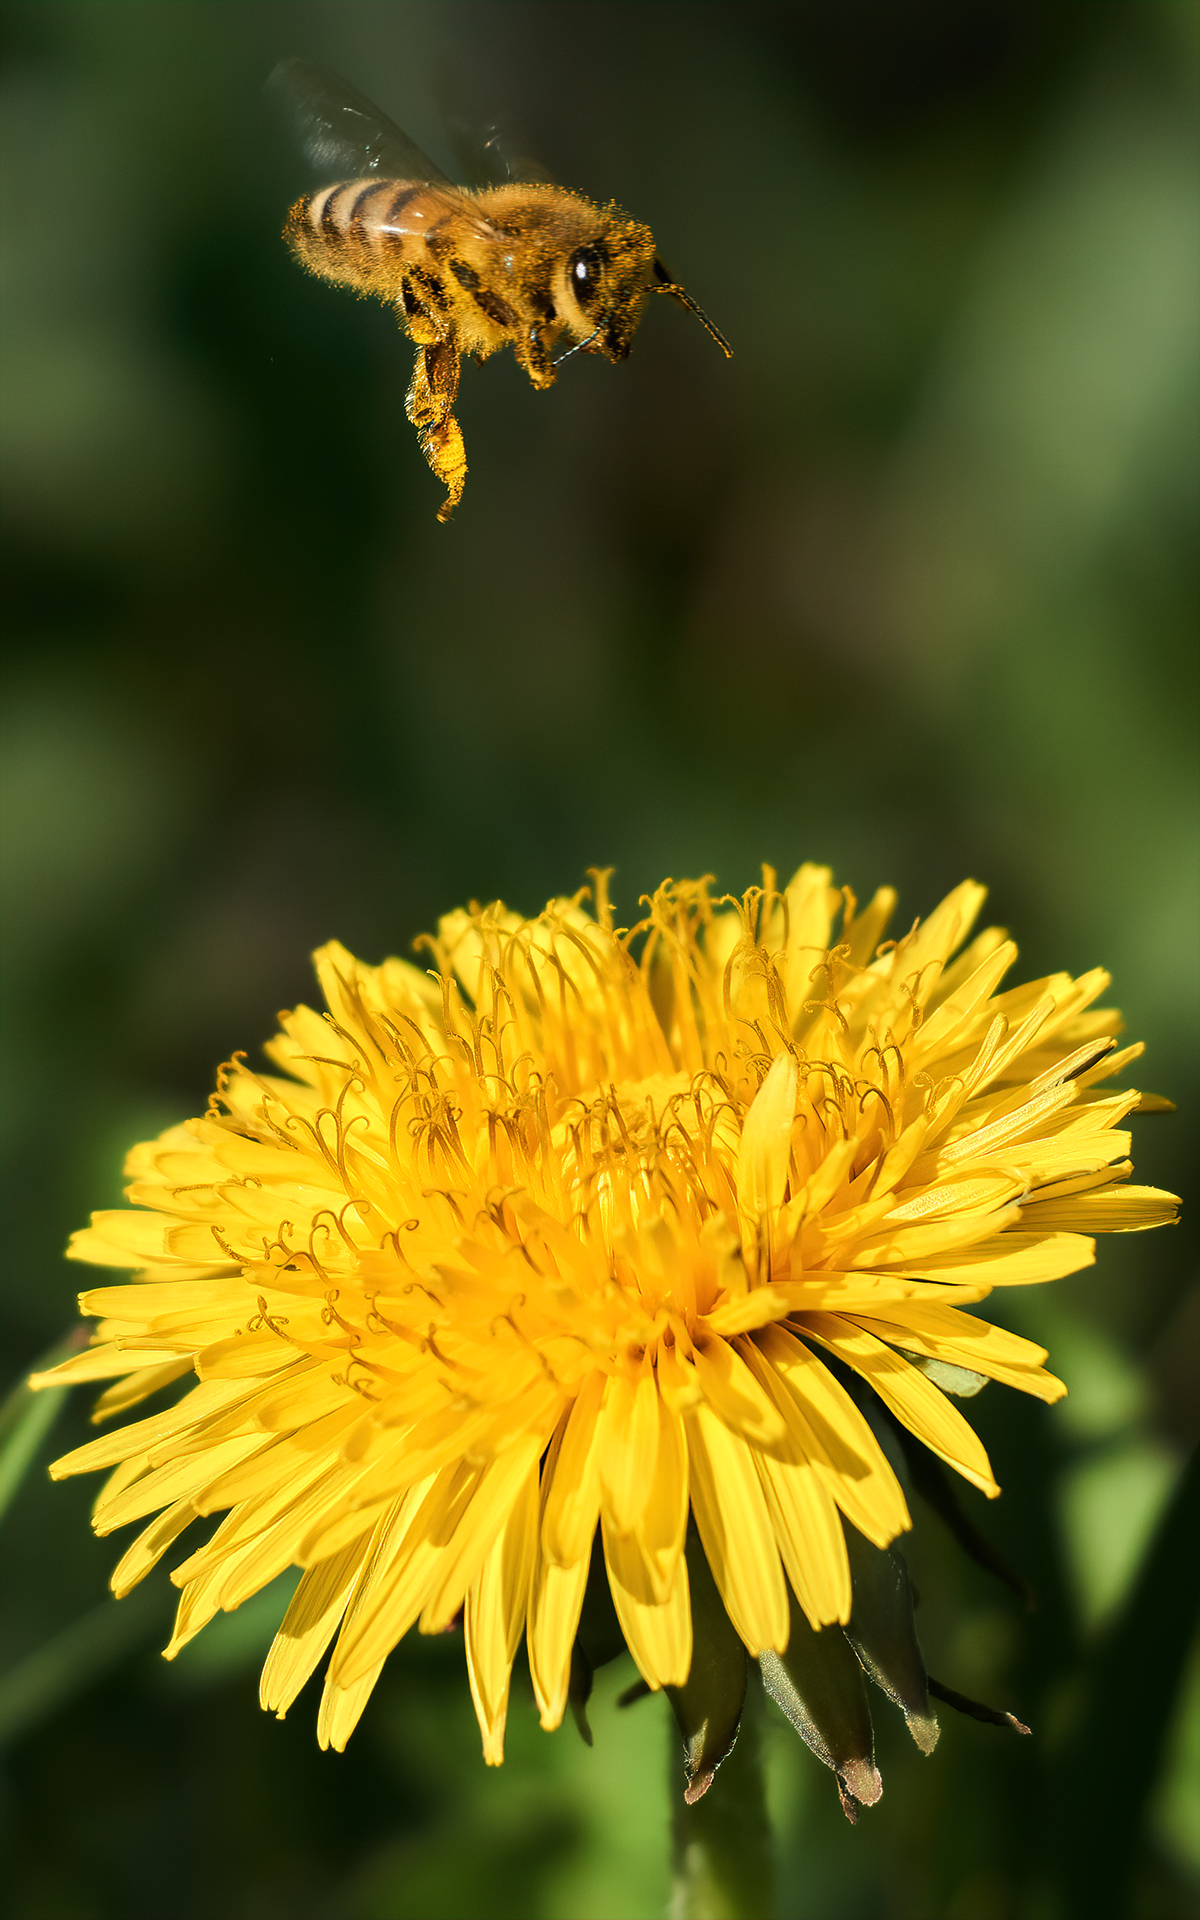 Landing of the bee on the dandelion...